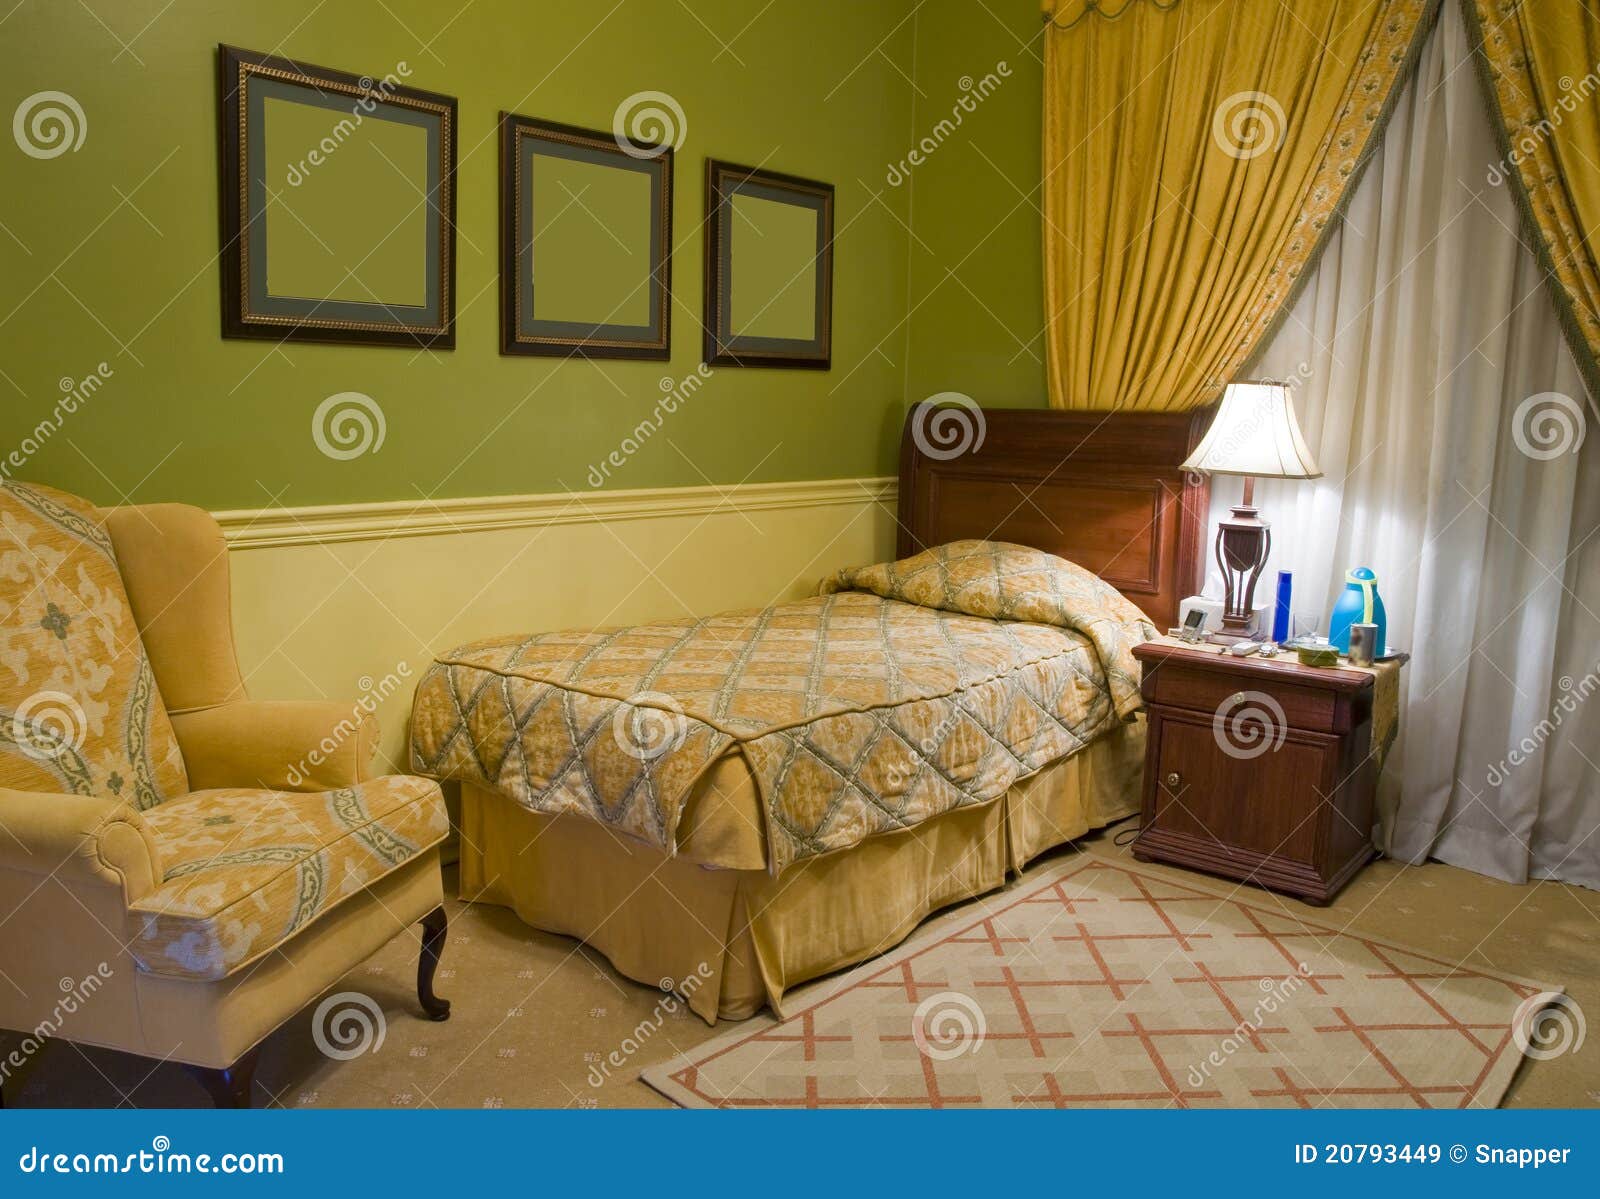 single bed bedroom